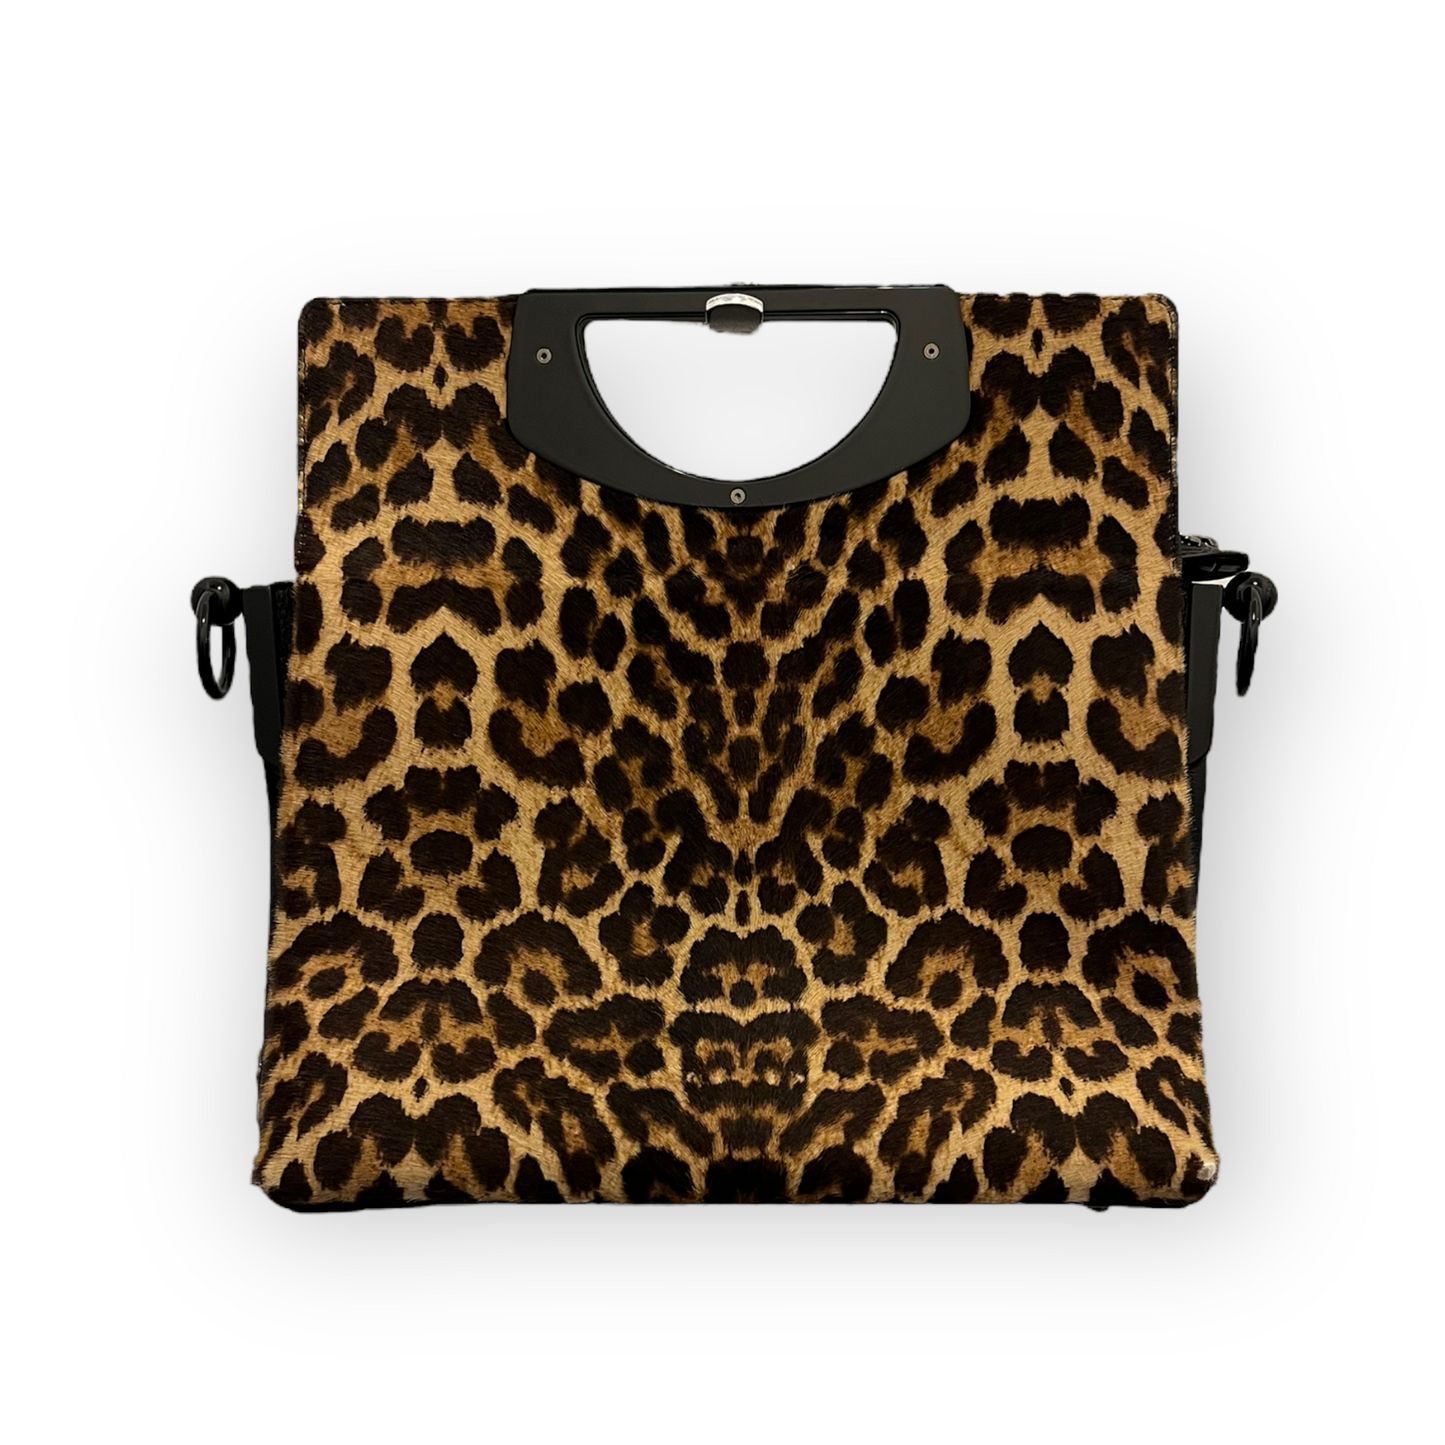 Louboutin Passage Black and Leopard Print Bag